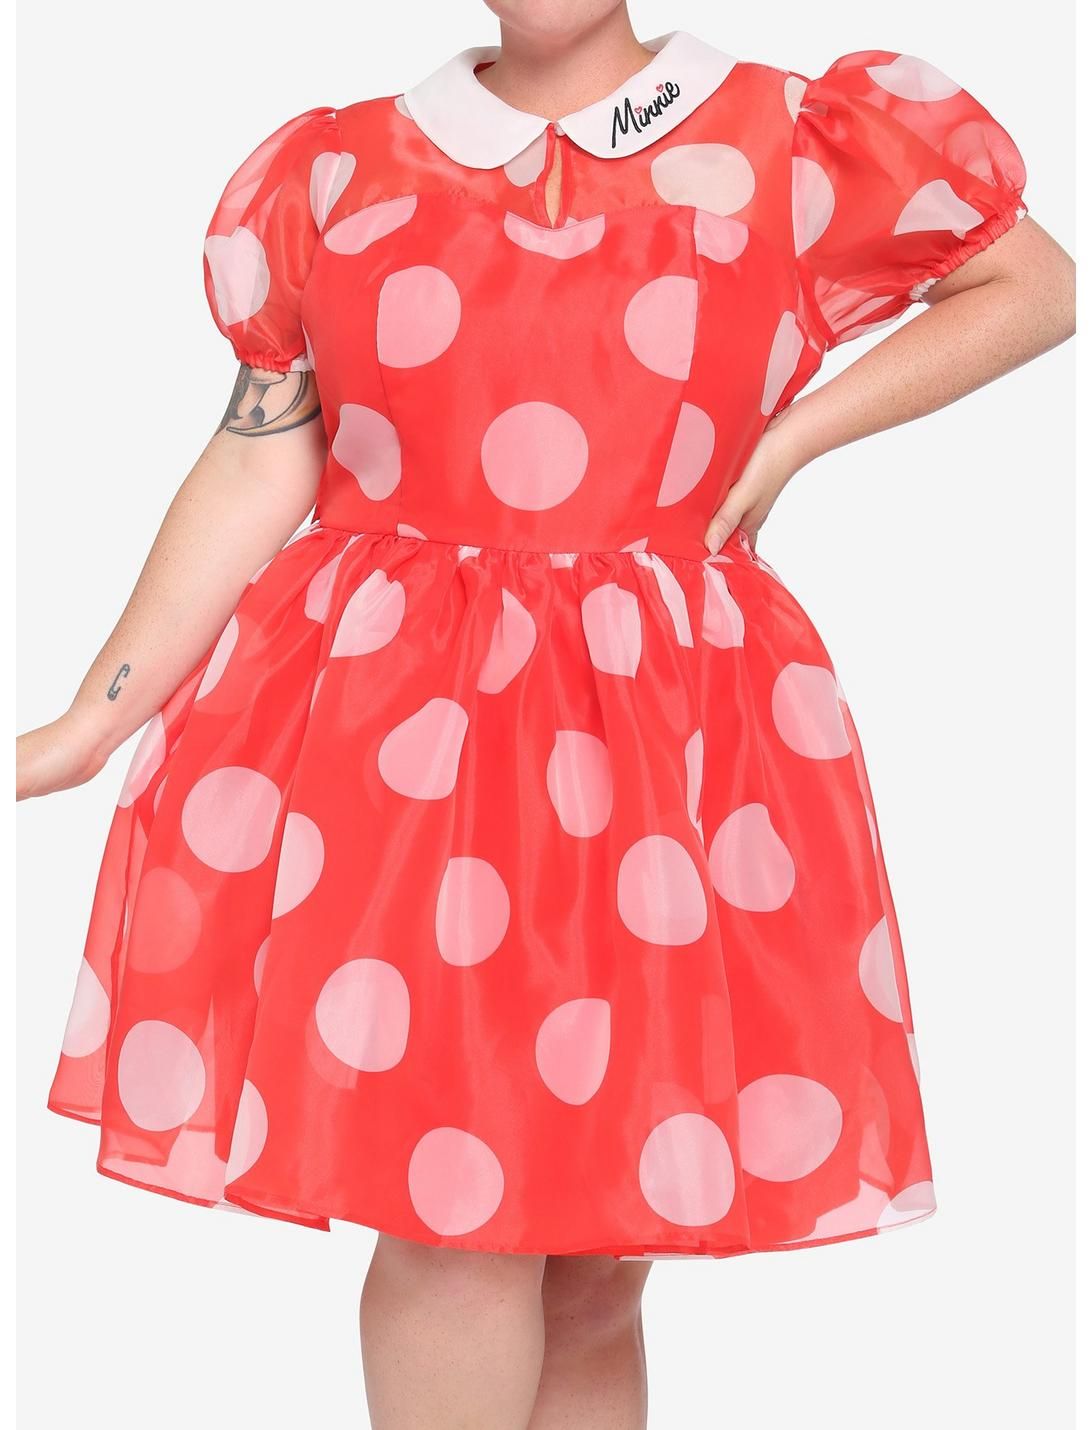 Disney Minnie Mouse Dress Plus Size | Hot Topic